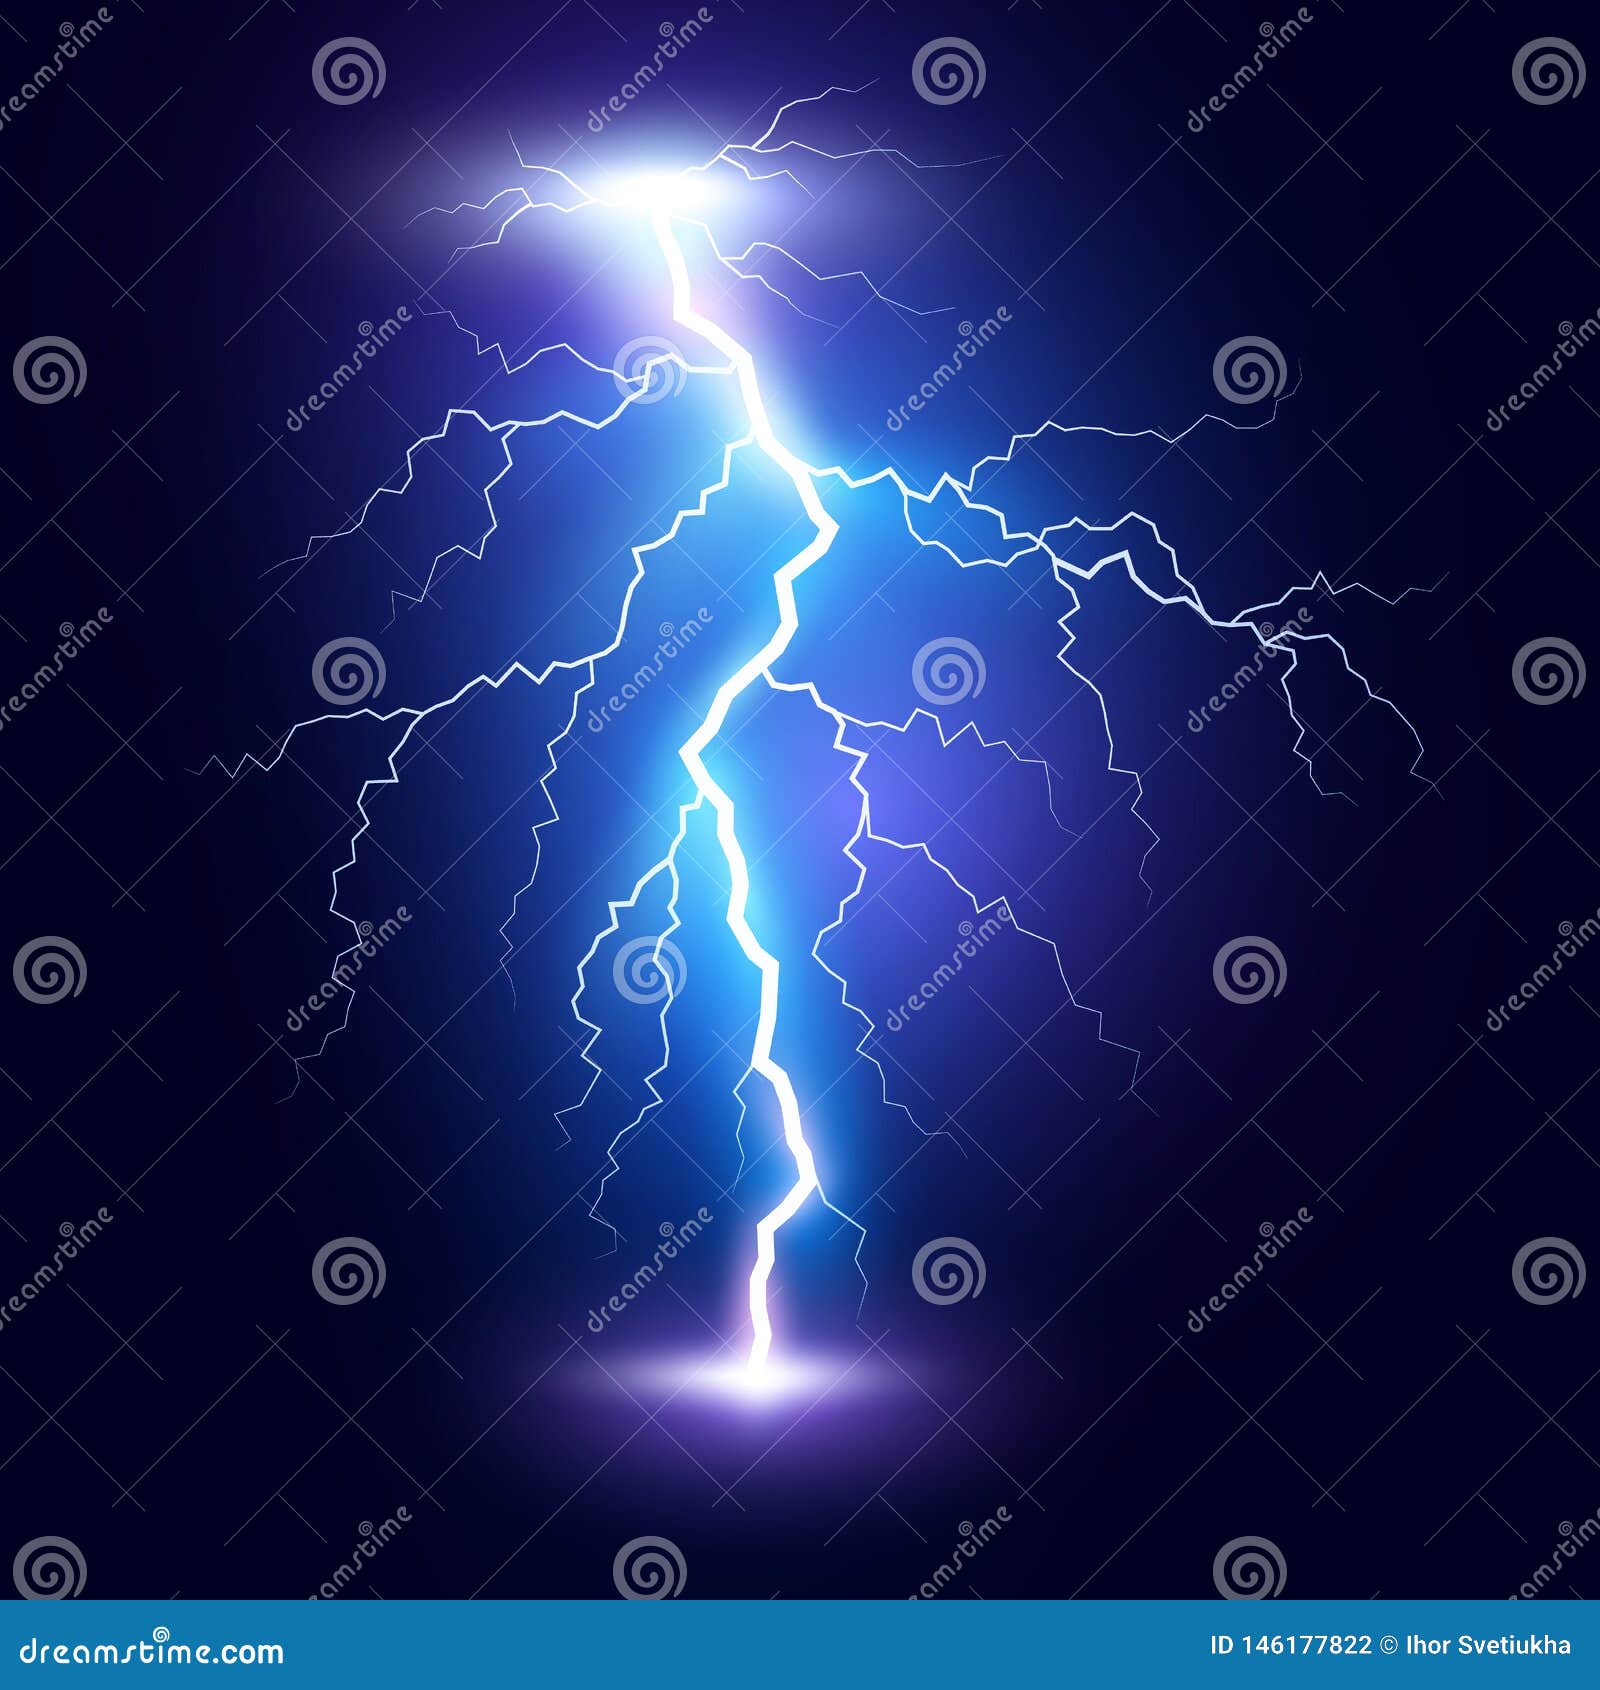 lightning flash bolt or thunderbolt. blue lightning or magic power blast storm.  